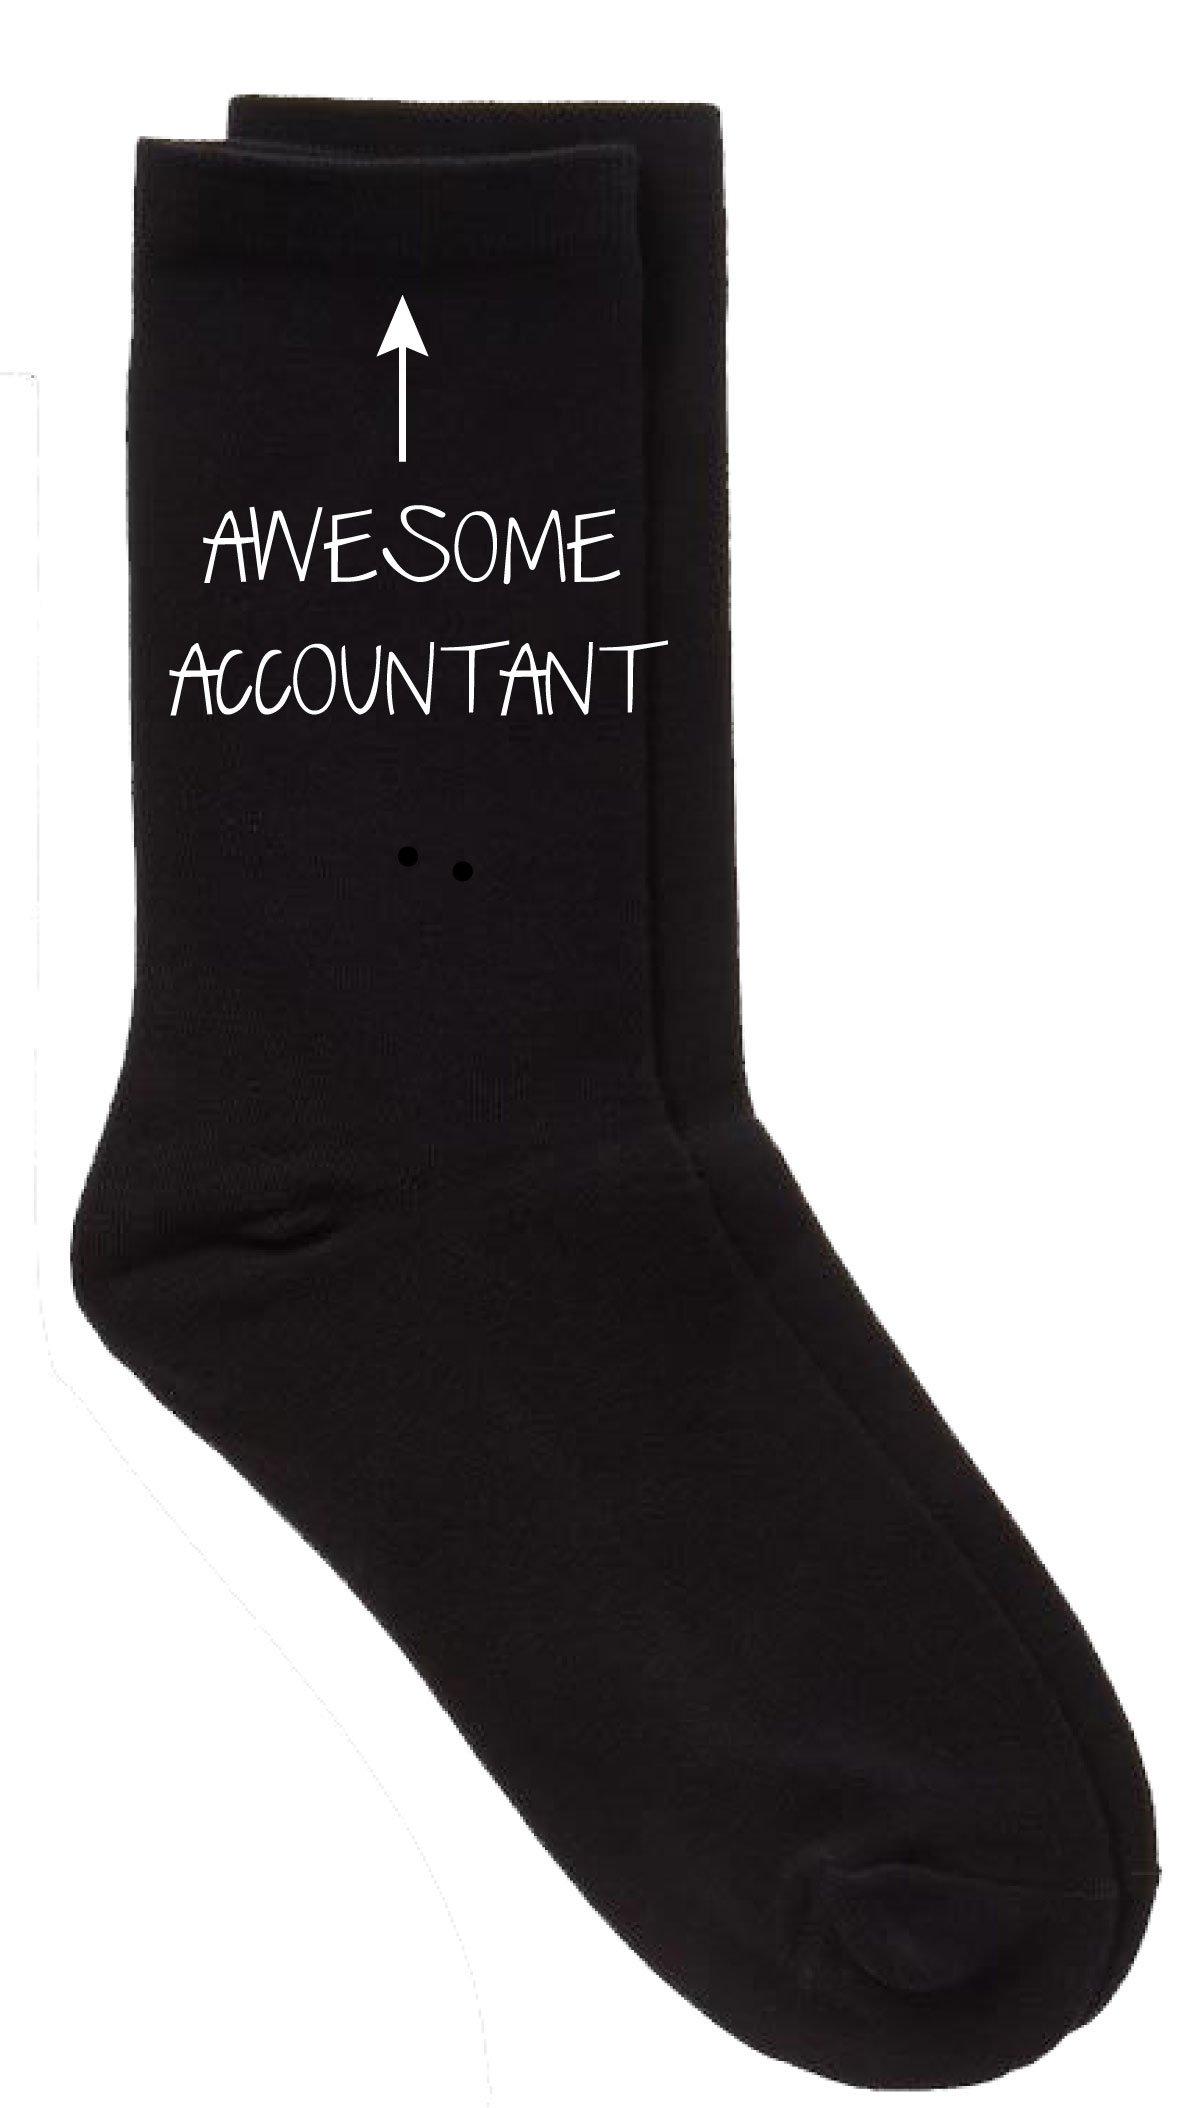 Awesome Accountant Black Calf Socks